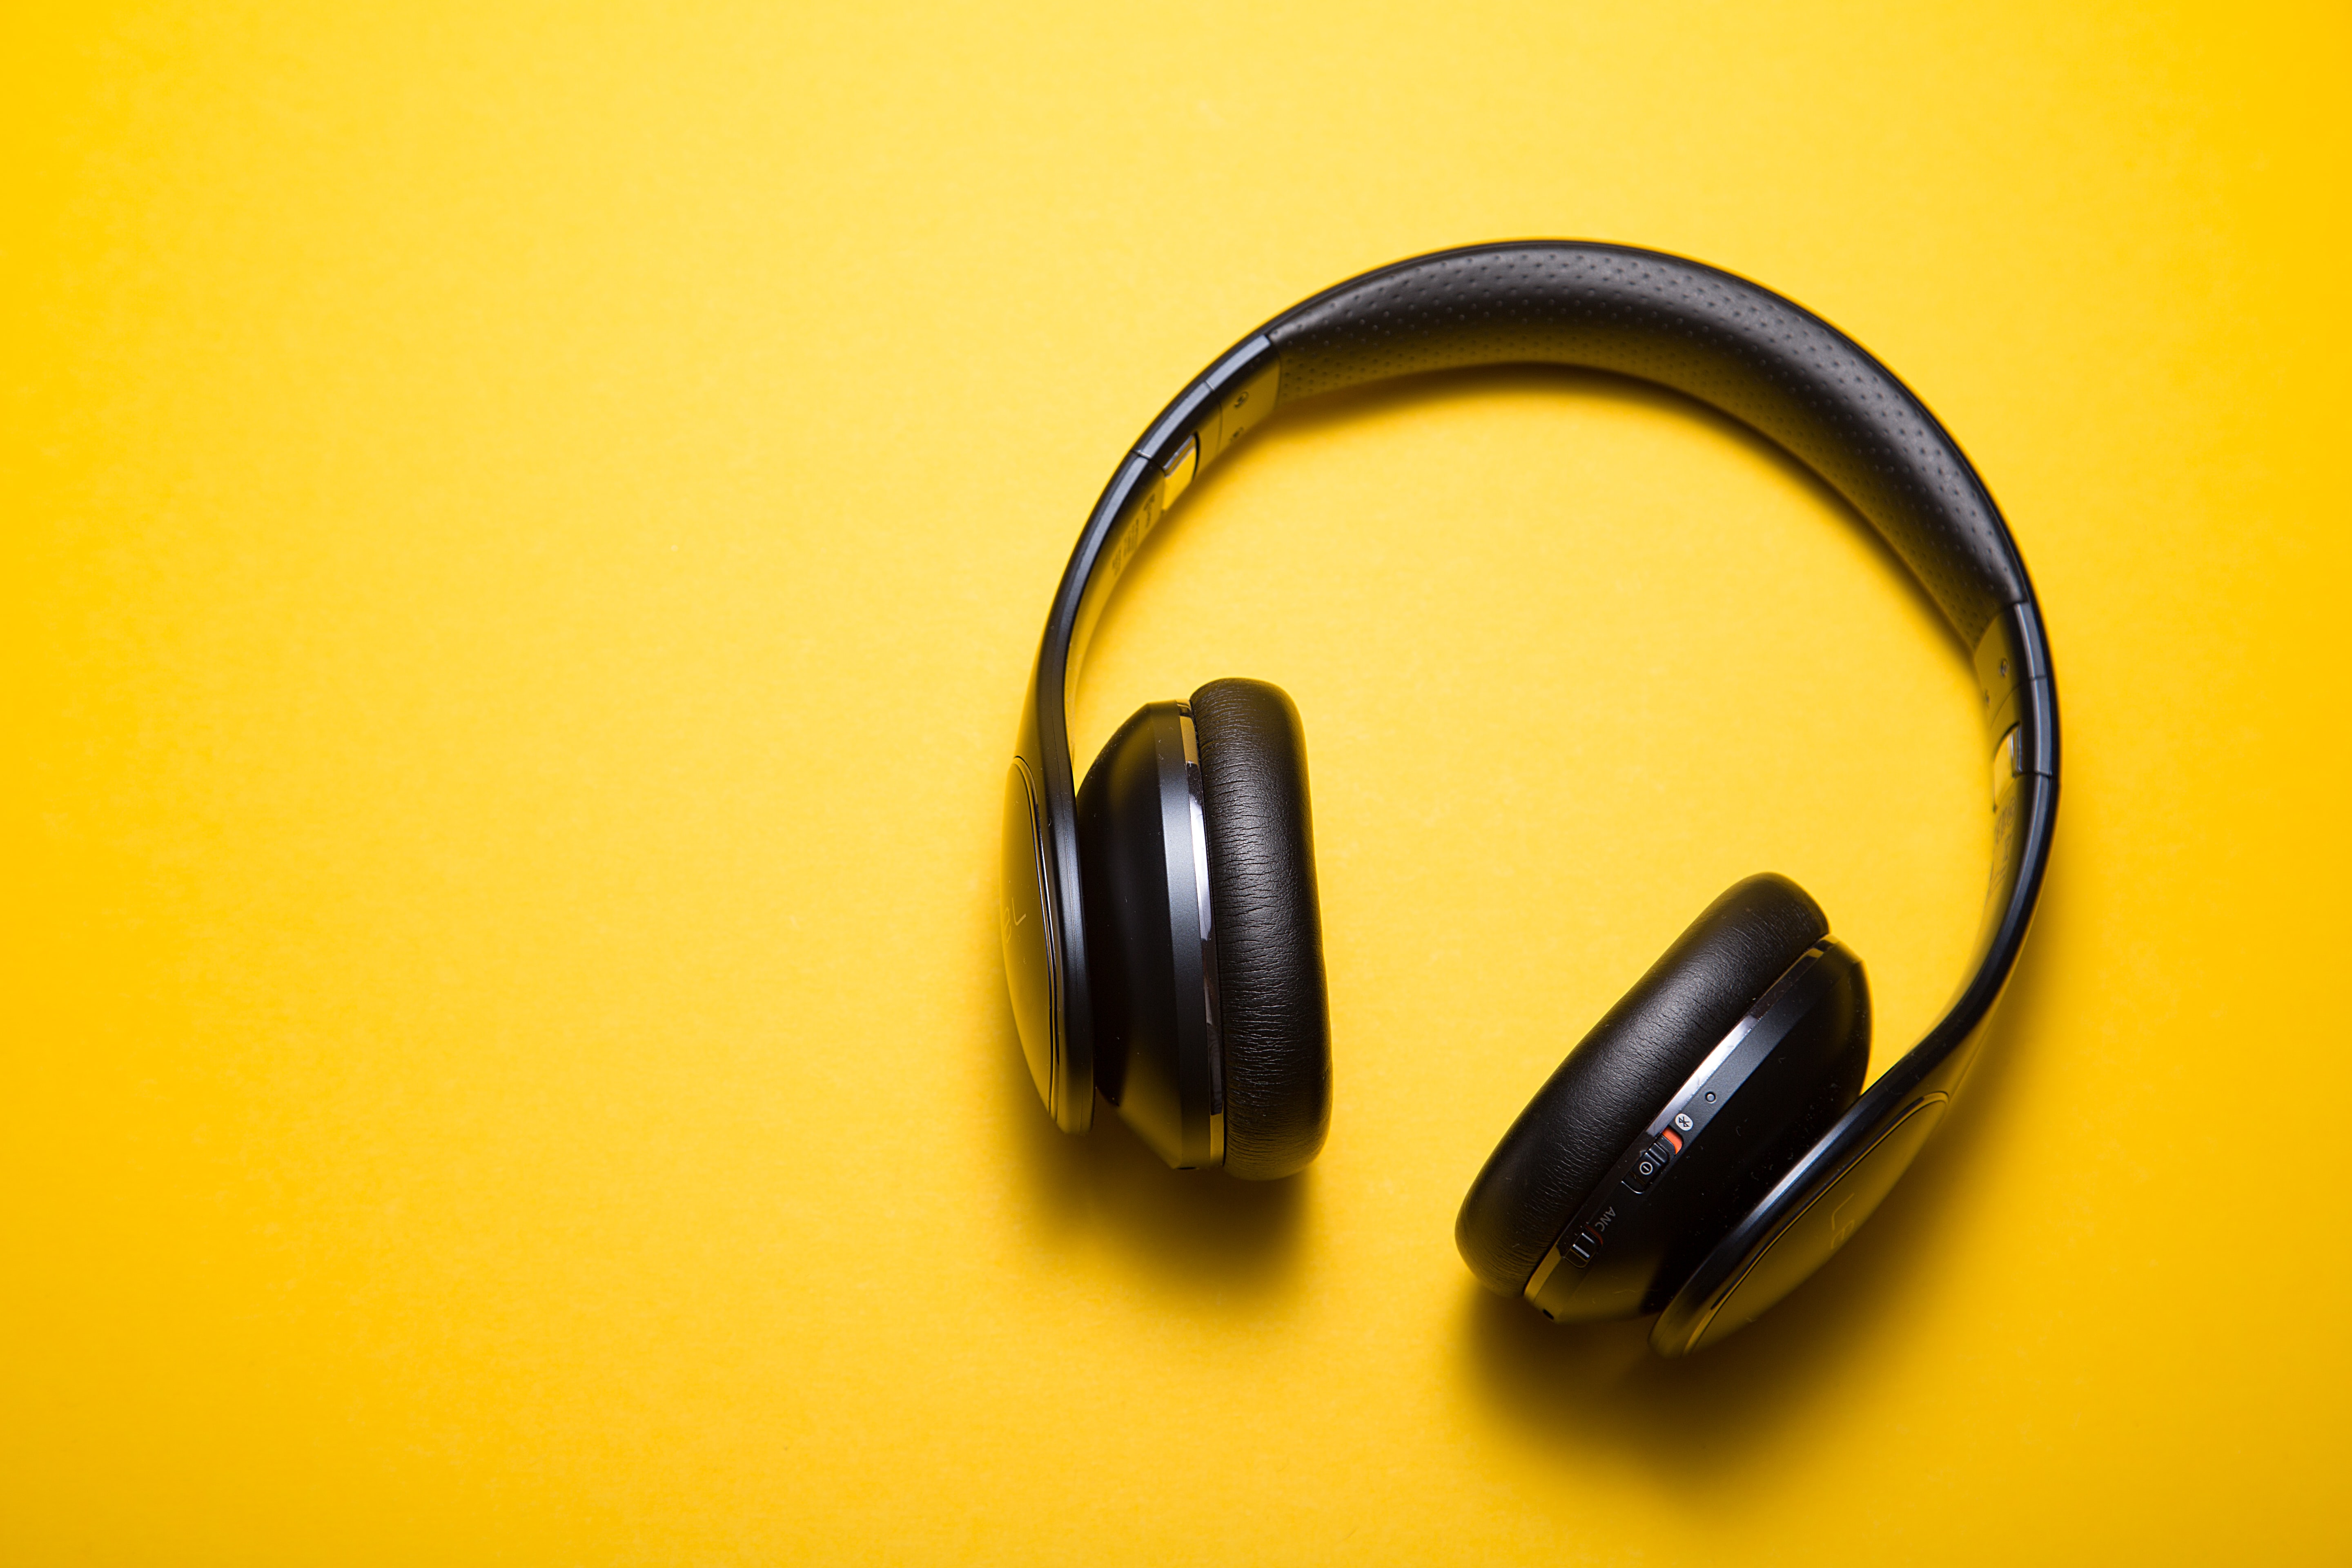 Pair of headphones on yellow background.